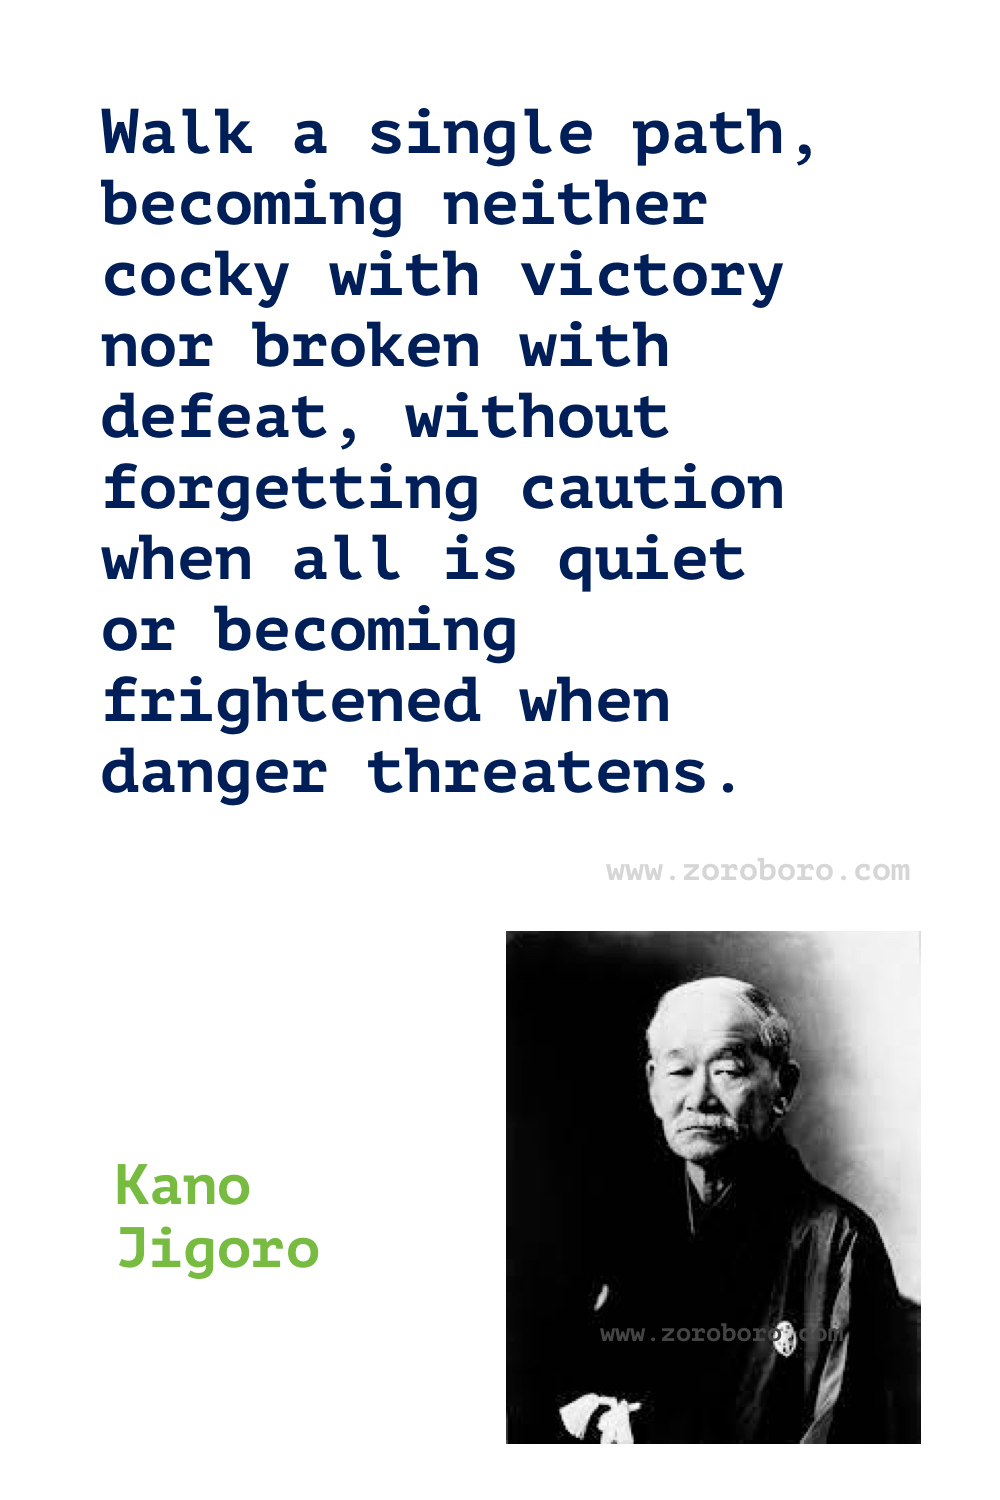 Kano Jigoro Quotes, Kano Jigoro Judo Quotes, Kano Jigoro Teaching, Kano Jigoro Jiu-Jitsu Quotes, Kano Jigoro Quotes.